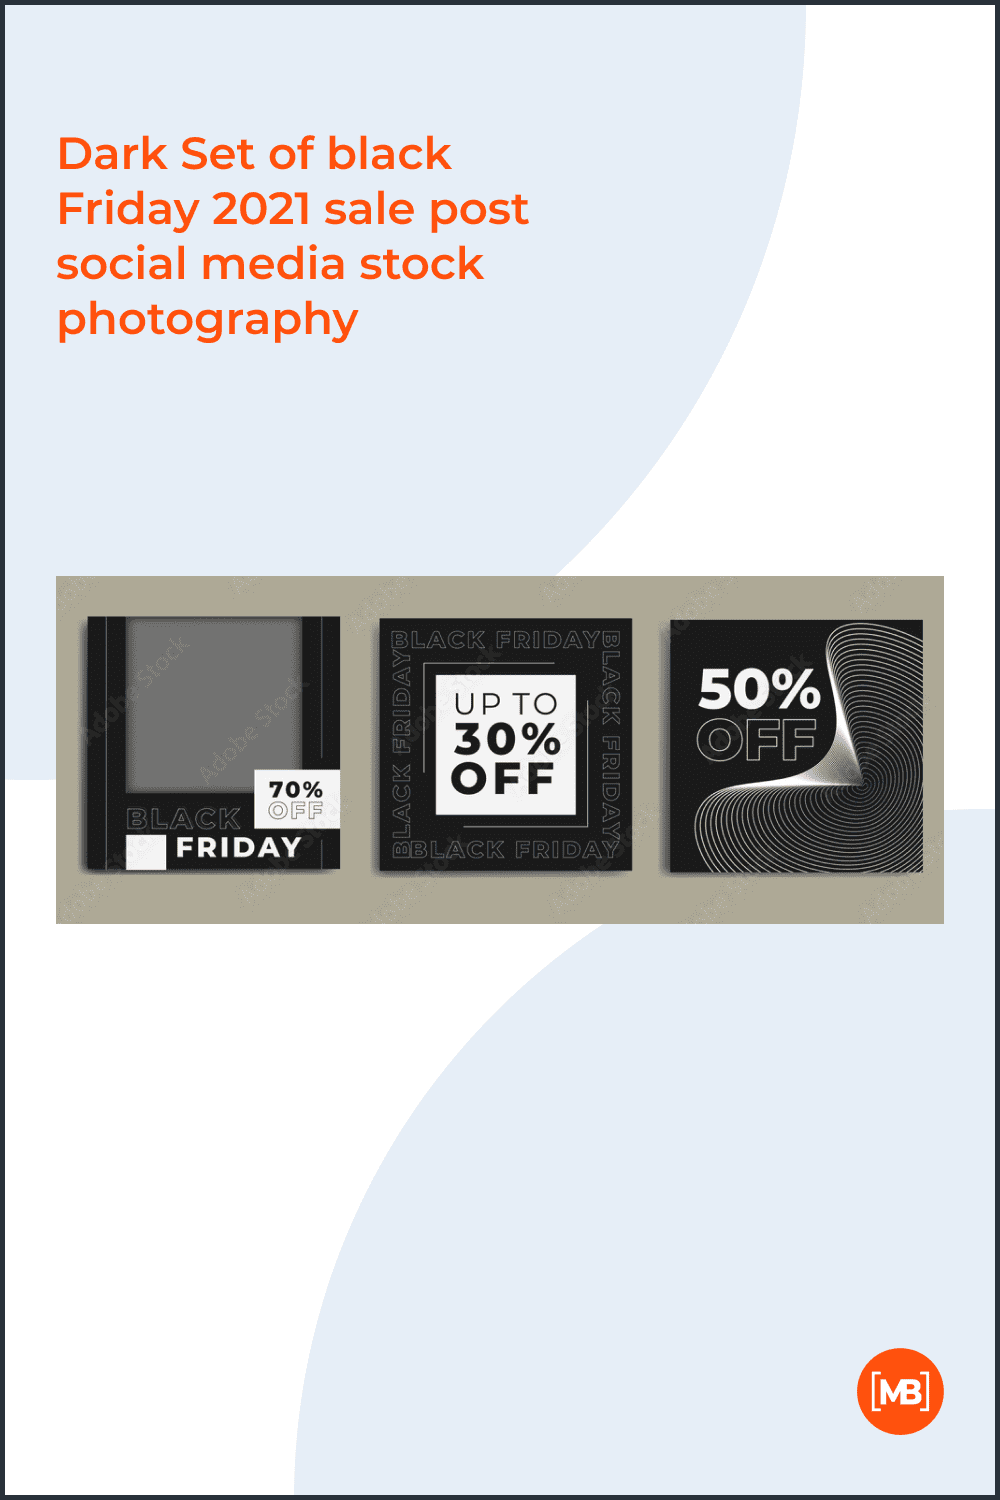 Dark Set of Black Friday sale post social media stock photography.